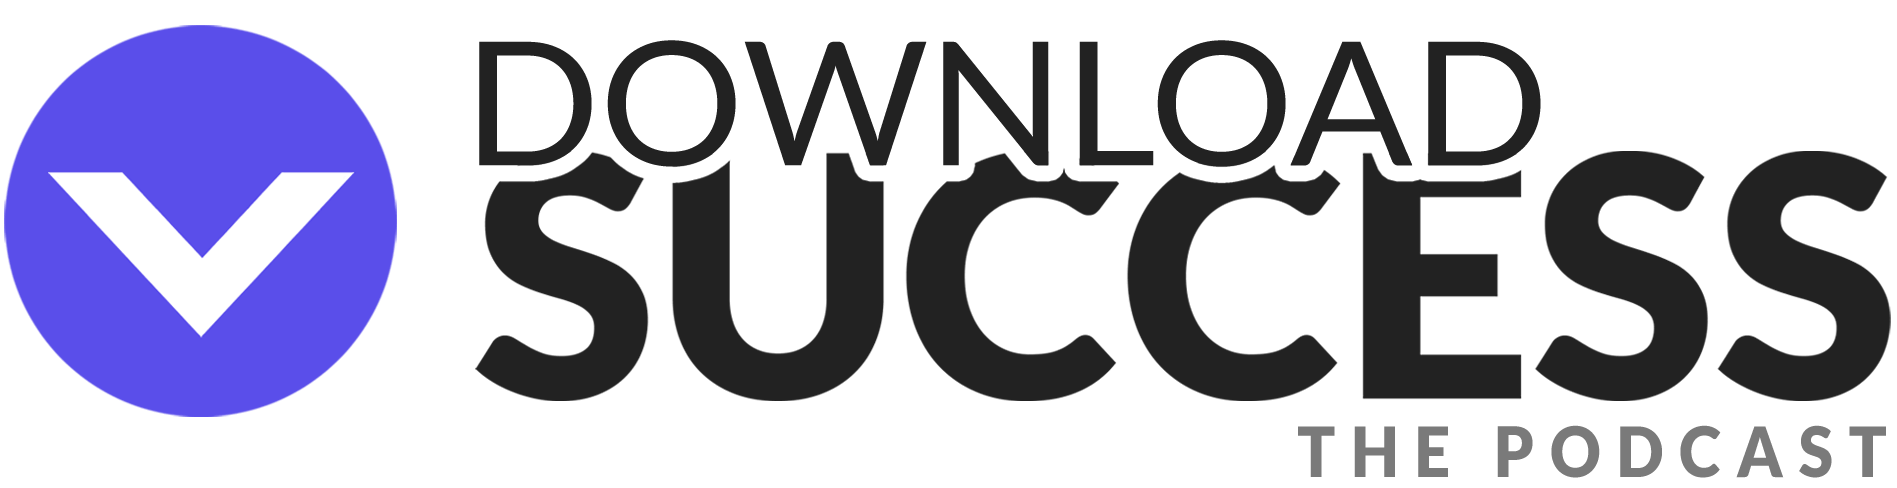 download success motivational & inspirational podcast logo